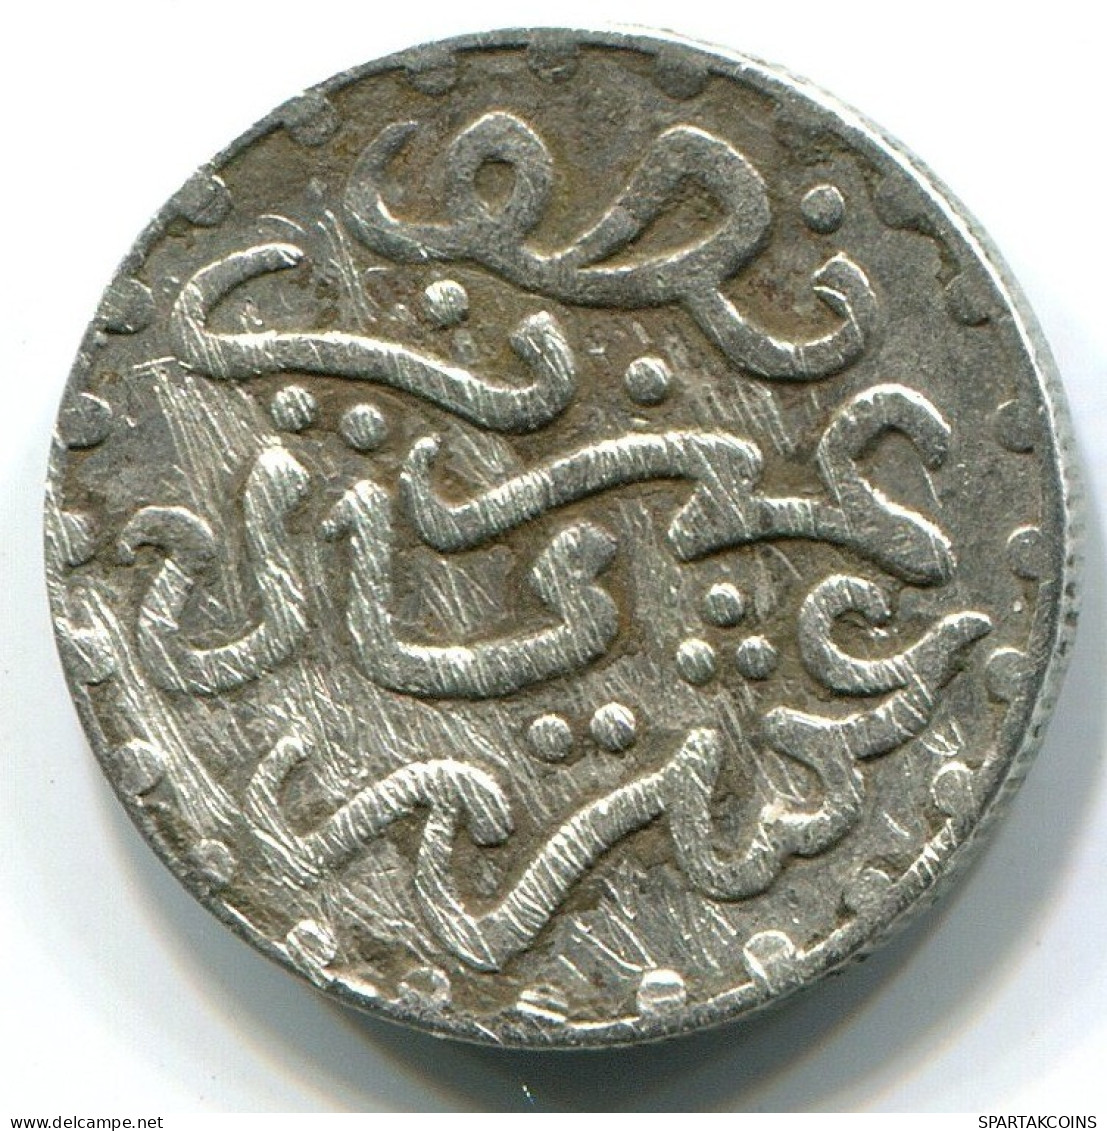 1/2 DIRHAM (1/20 RIAL) 1902 MOROCCO Abd Al-Aziz Paris Coin #W10471.18.U.A - Marruecos